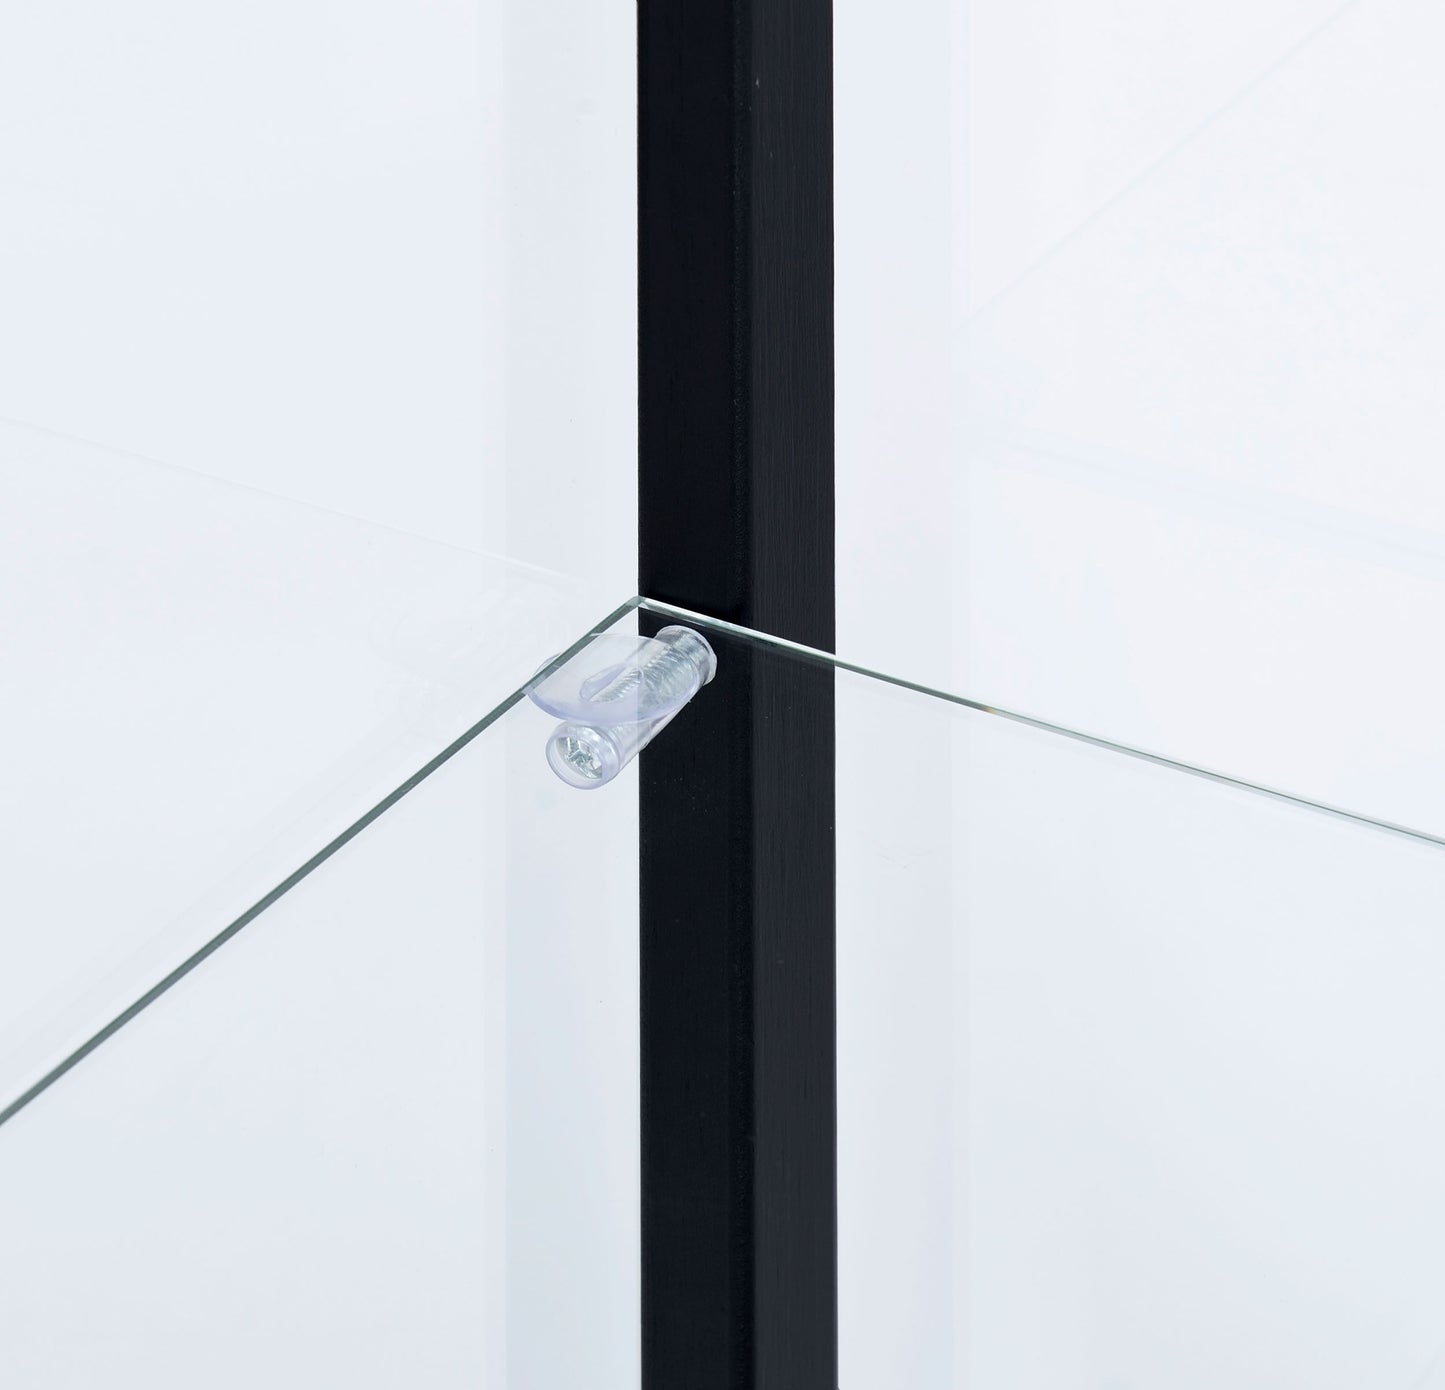 Delphinium 5-shelf Glass Curio Cabinet Black and Clear